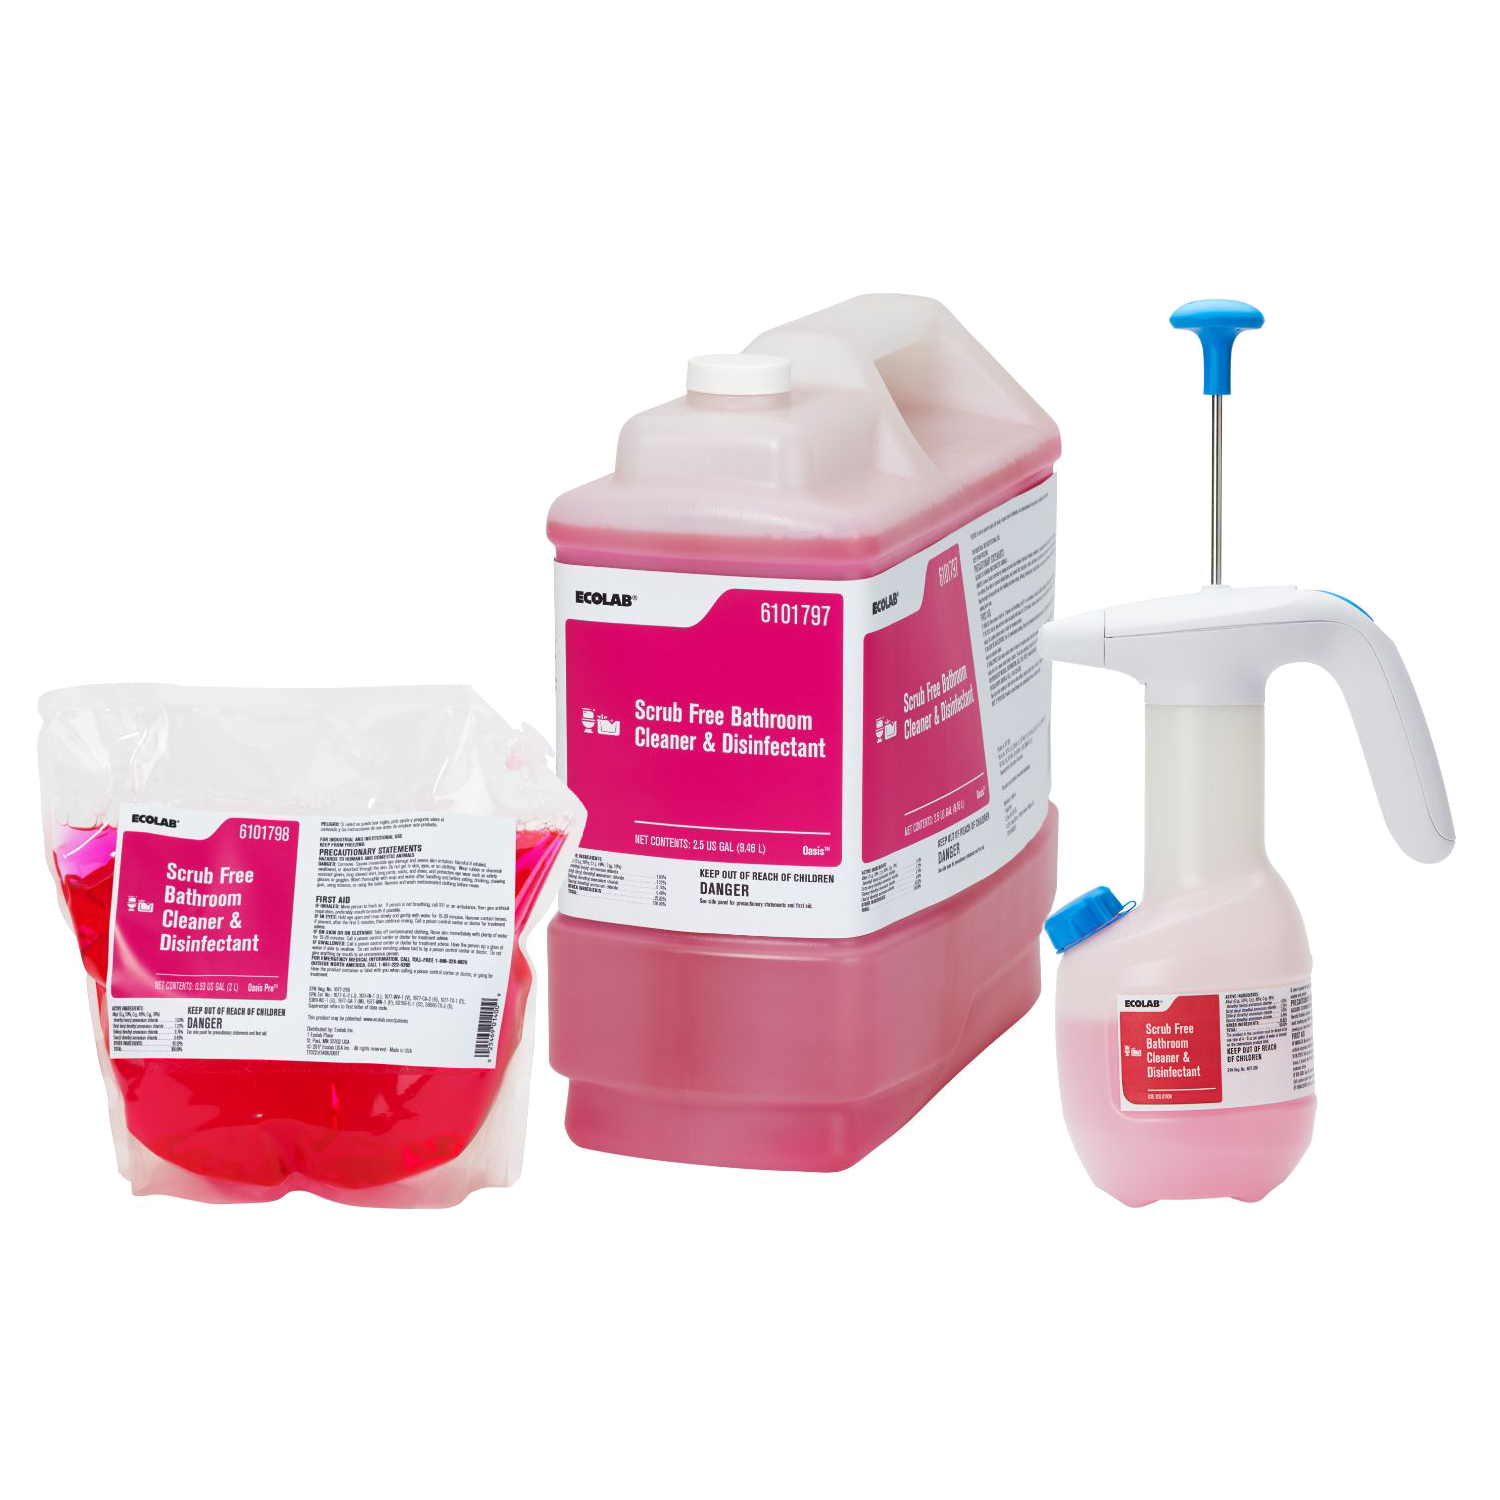 FACILIPRO 73 Disinfecting Acid Bathroom Cleaner